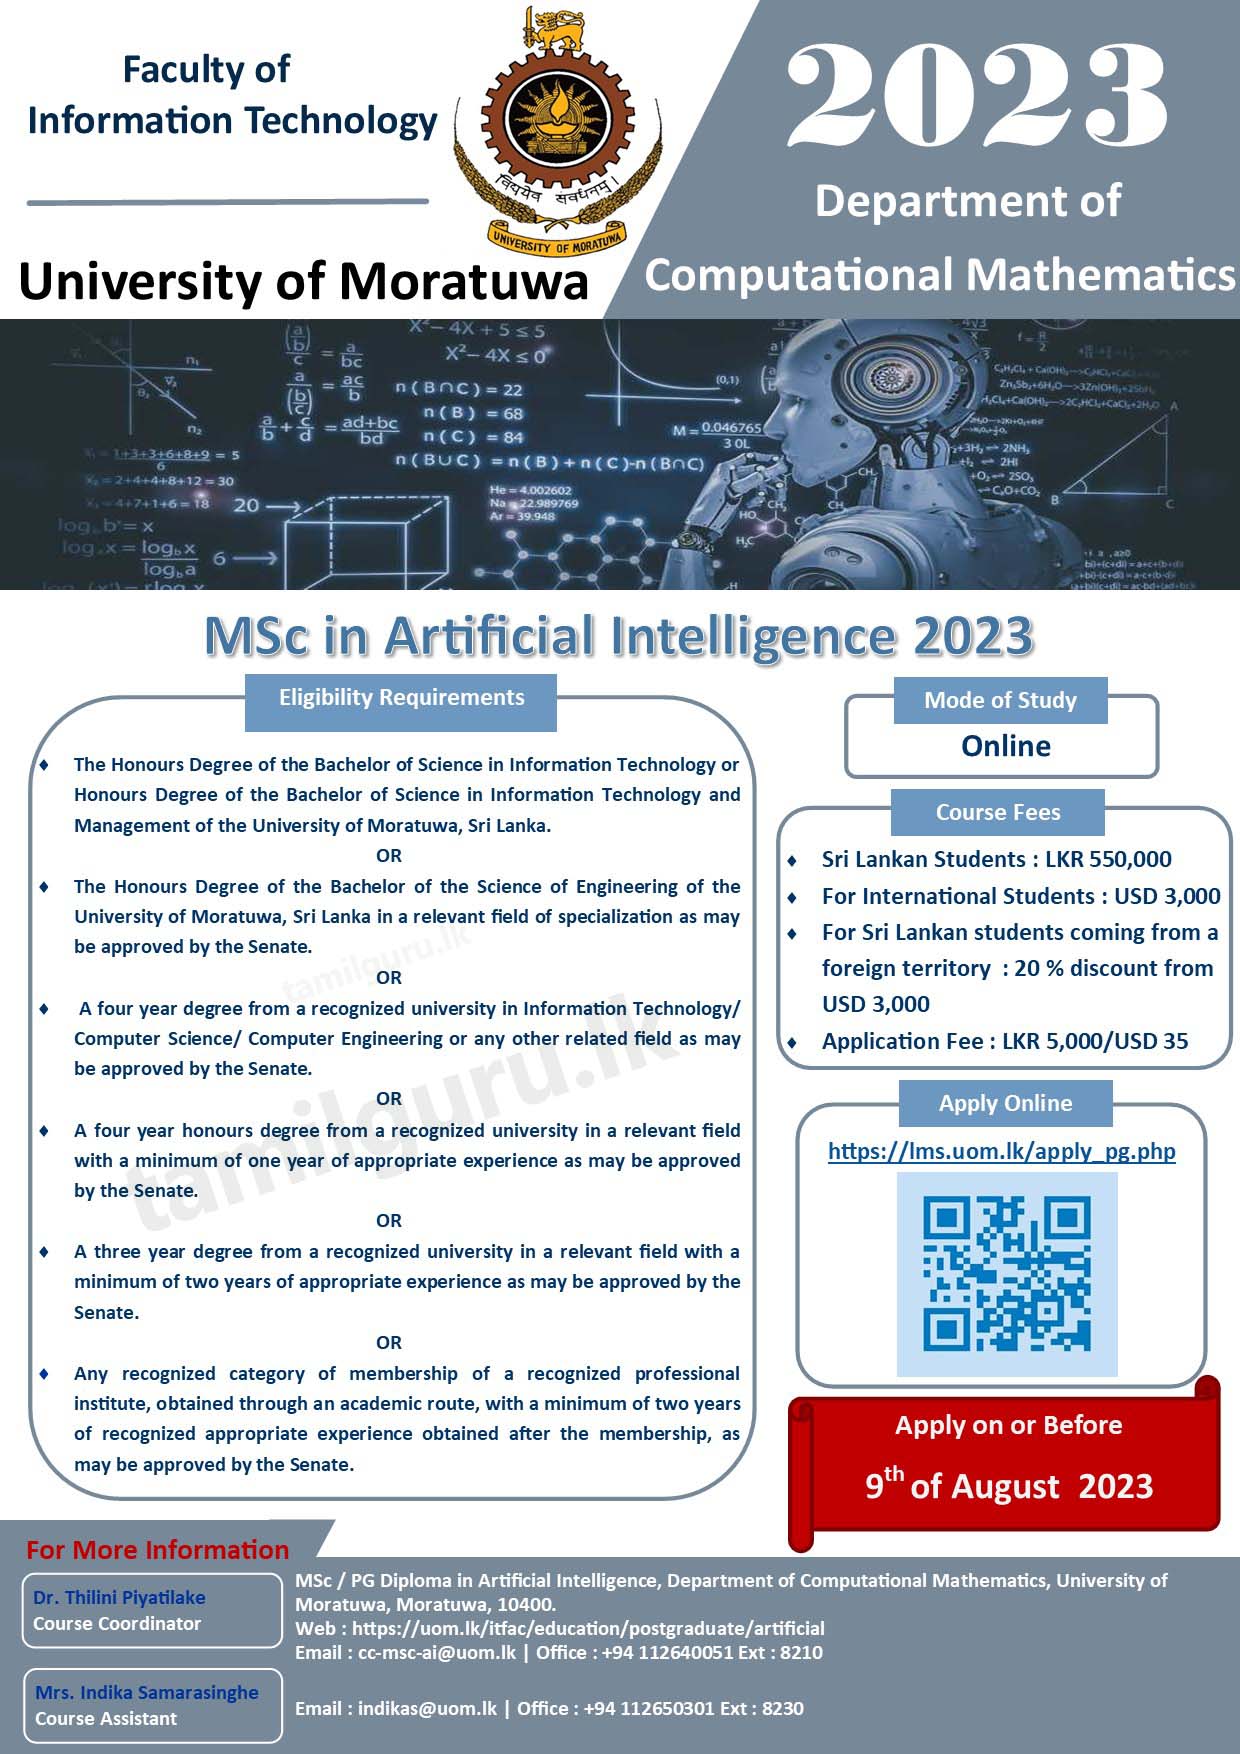 MSc in Artificial Intelligence (AI) 2023 - University of Moratuwa